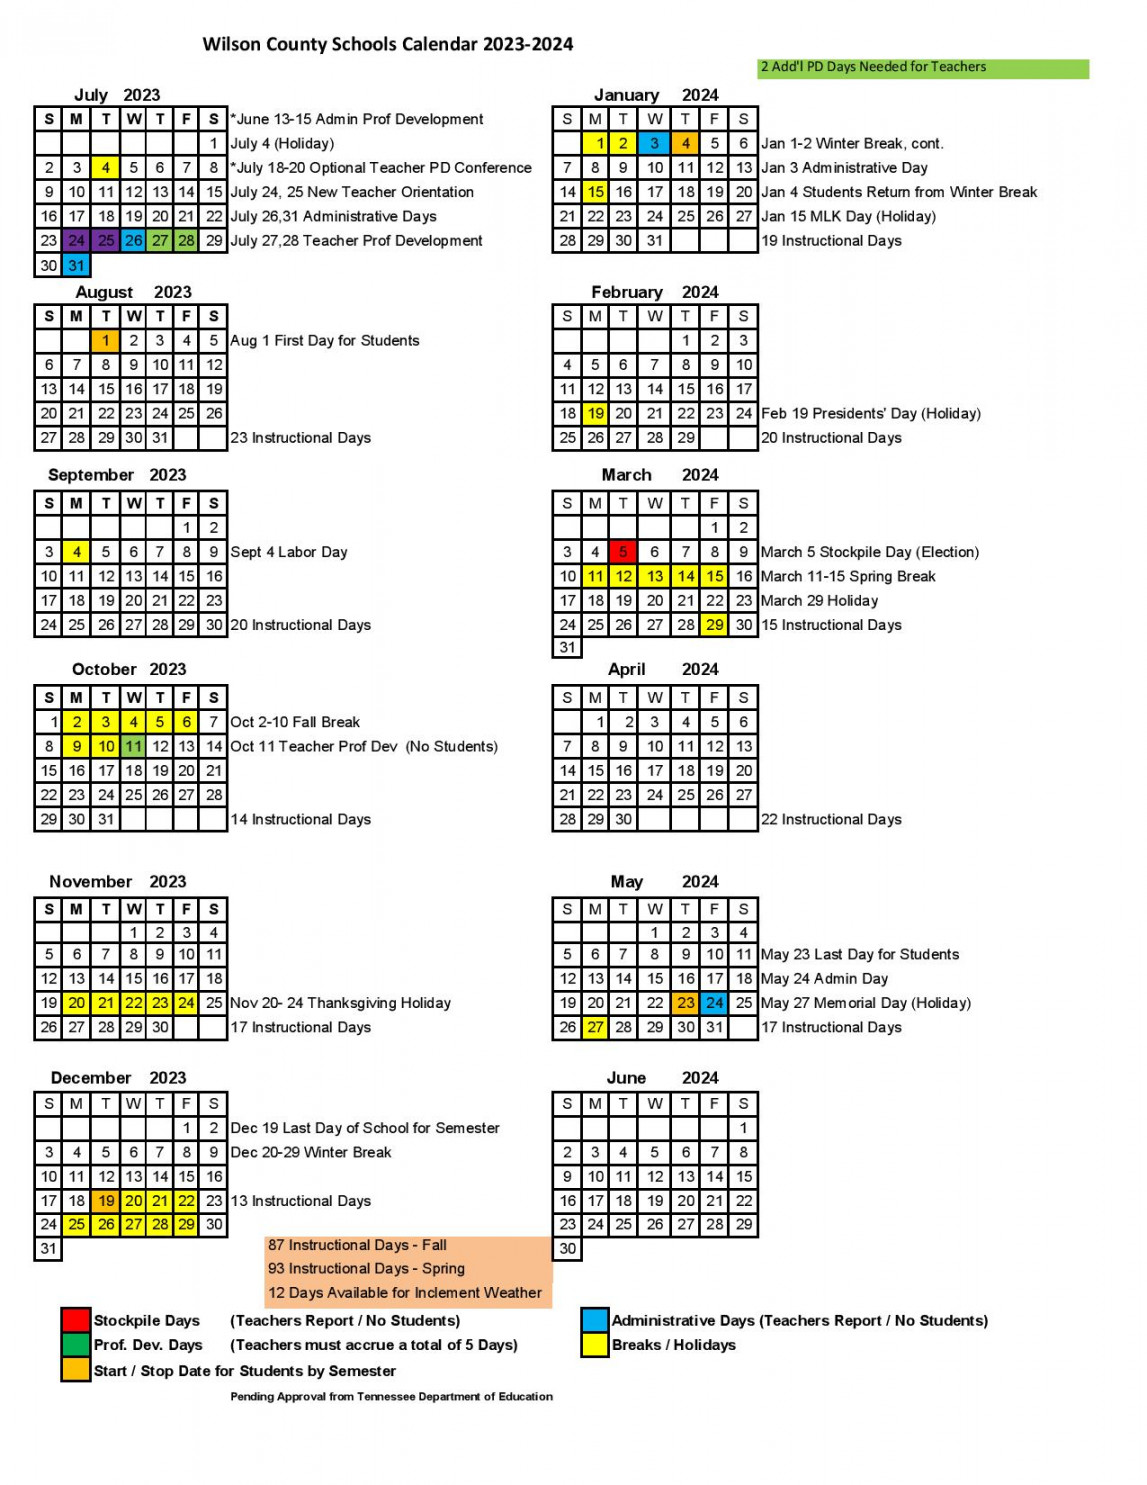 Wilson County Schools Calendar - (Holiday Breaks)